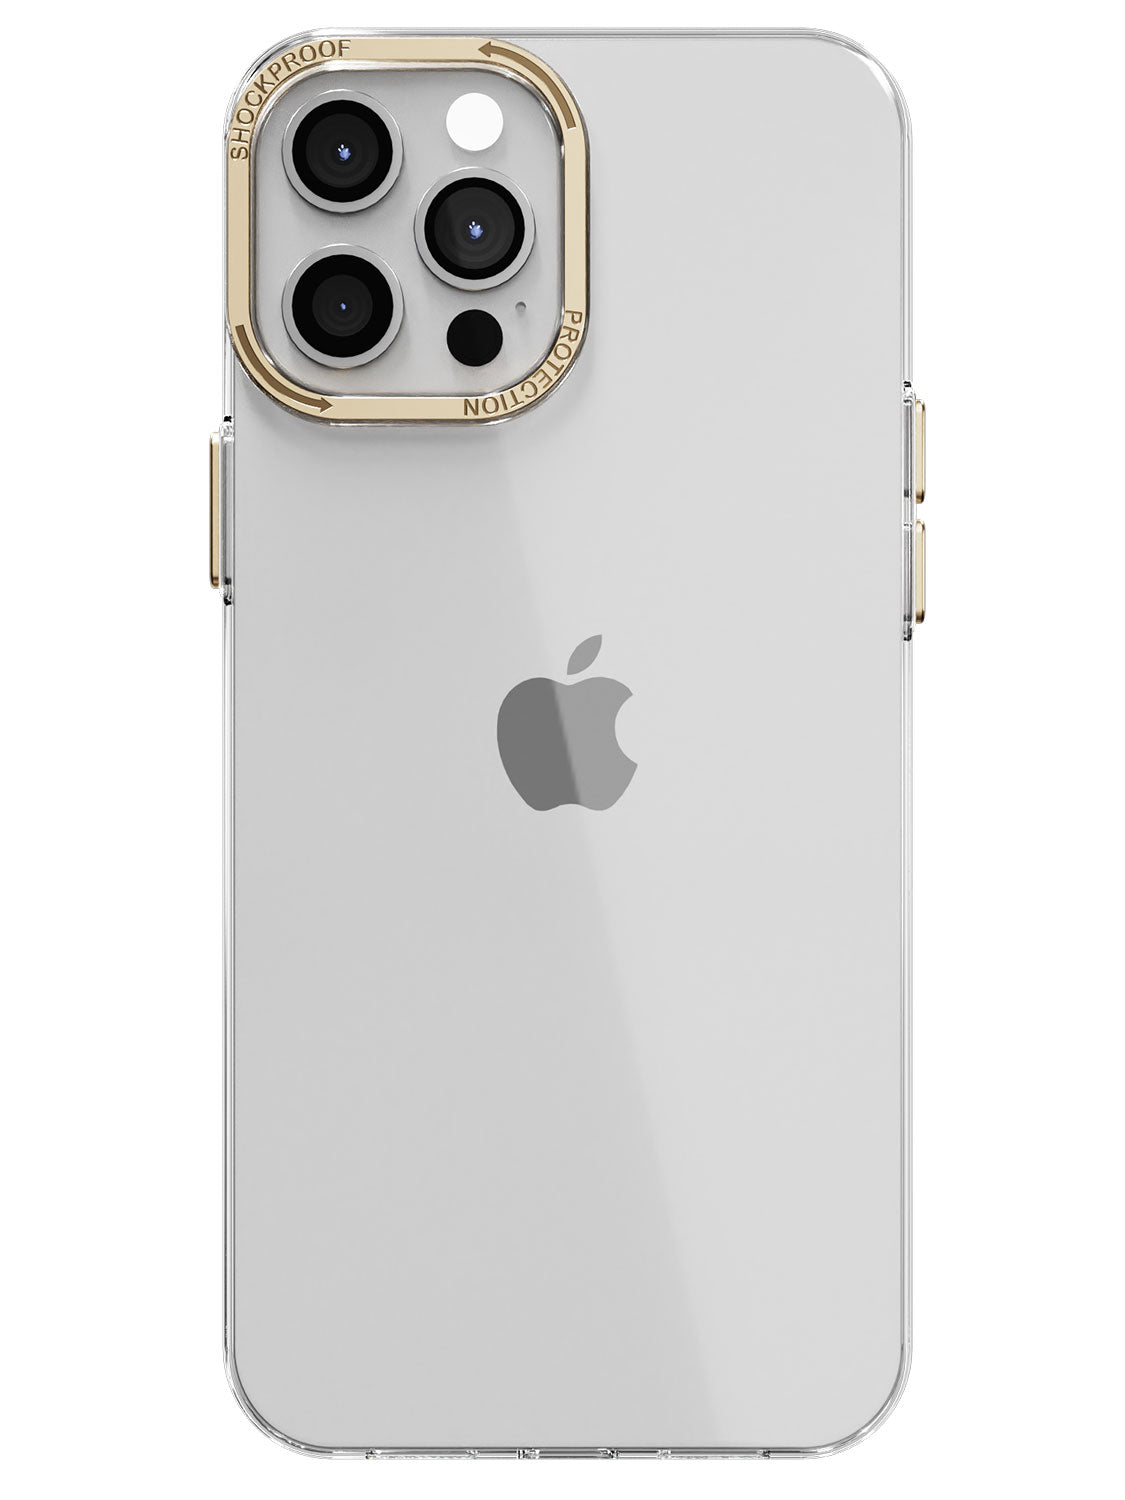 Metallic Clear Hard Case - iPhone 12 Pro Max (Golden)